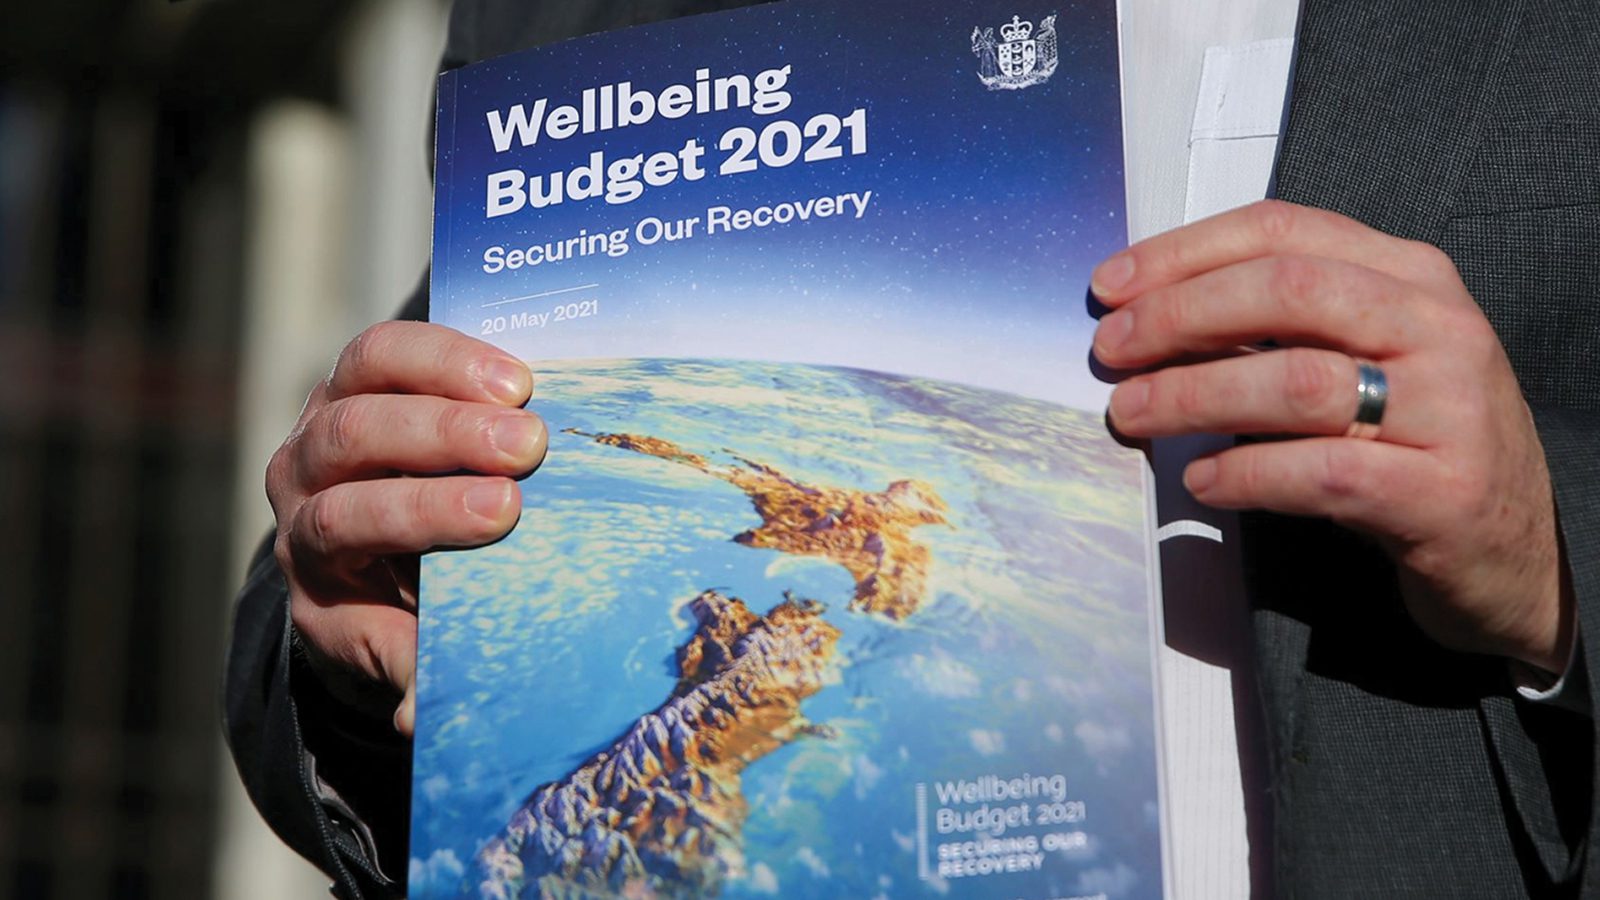 Blog Post - Visionwest Response to budget 2021